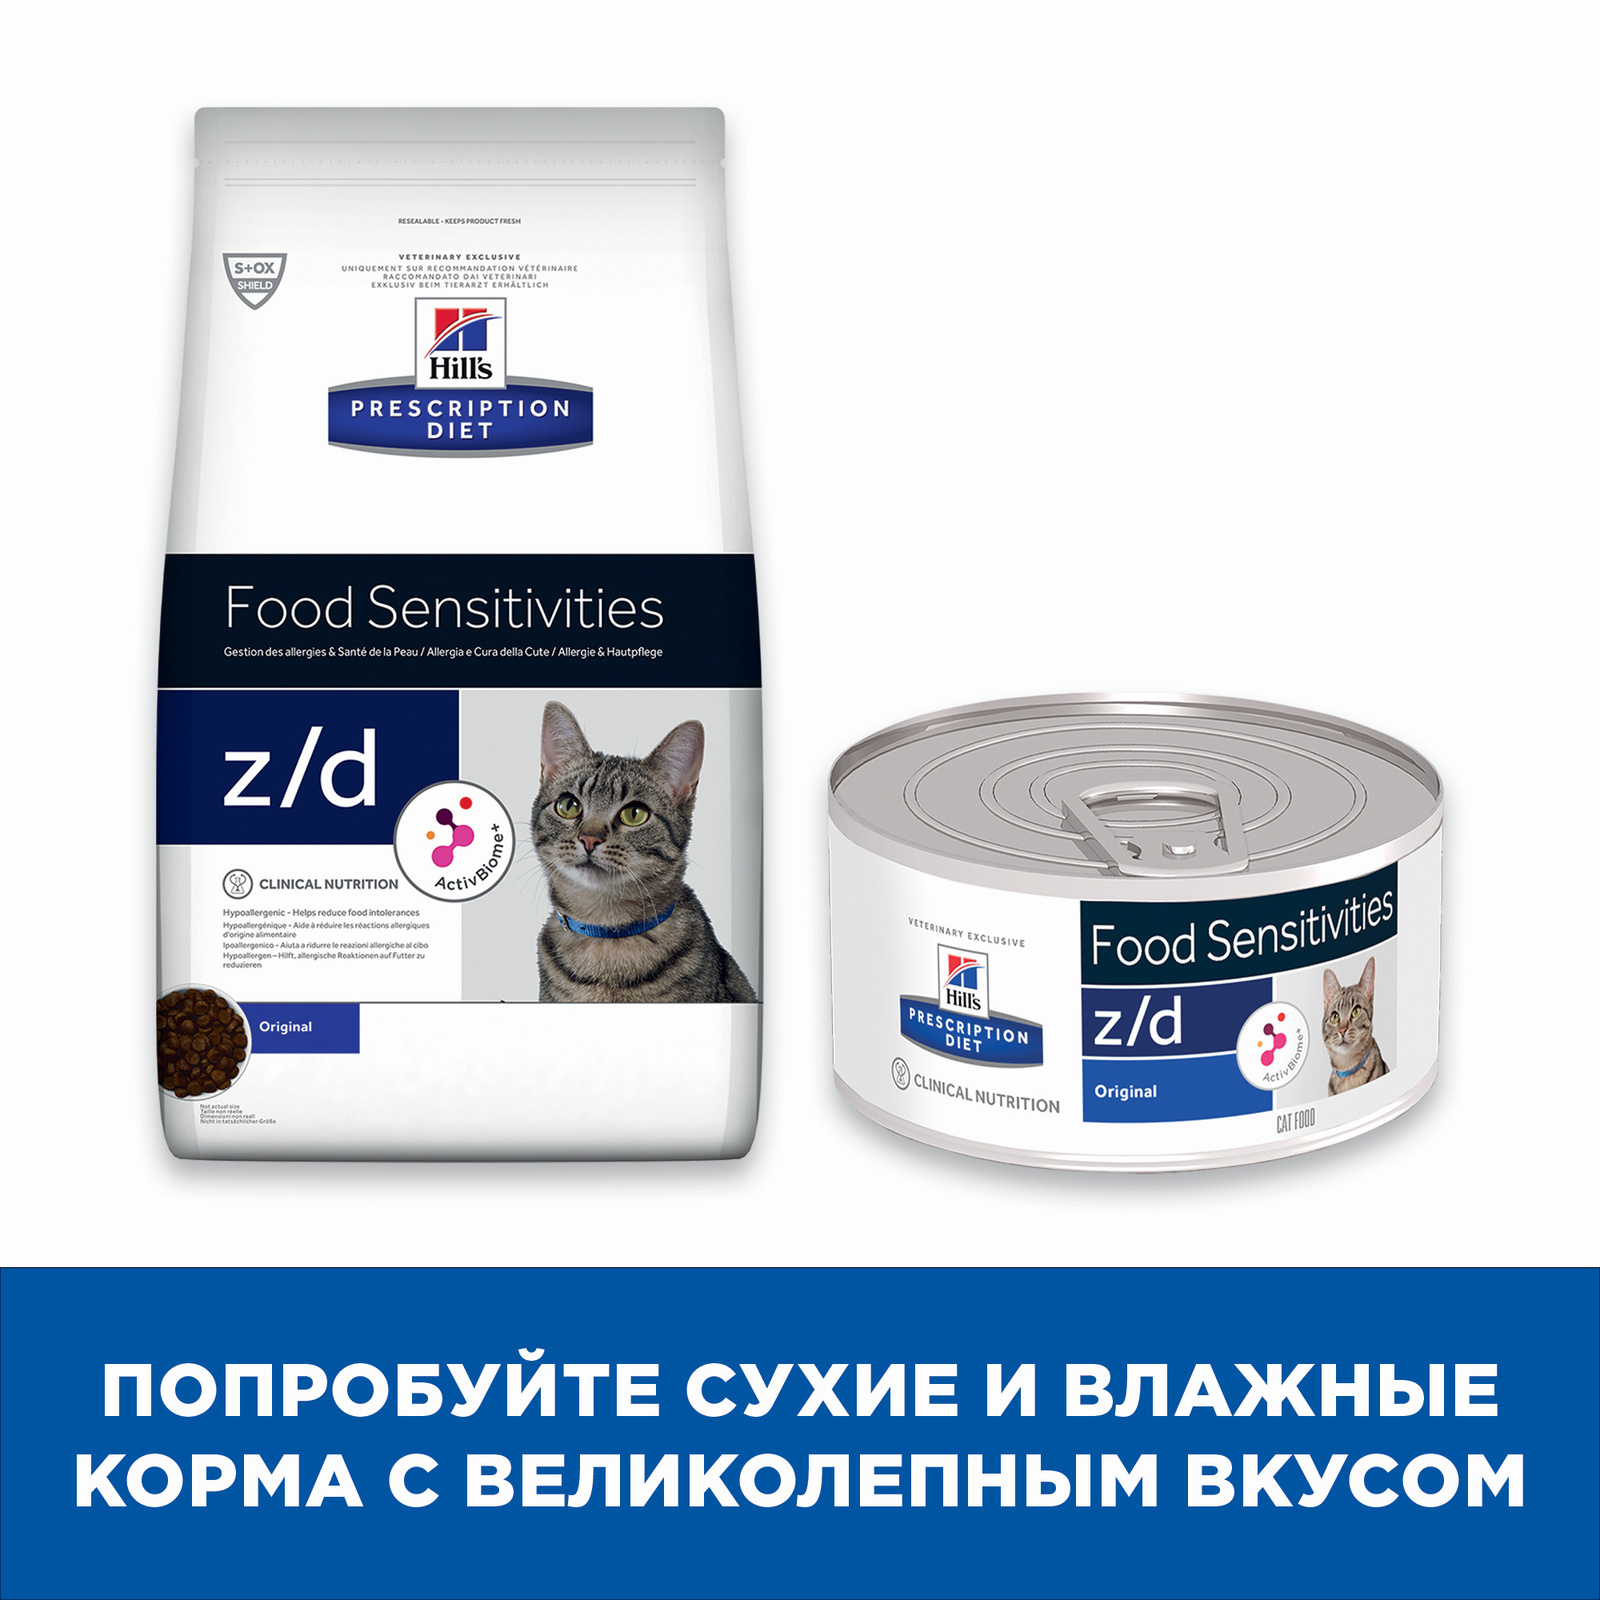 z/d Food Sensitivities сухой диетический, для кошек при пищевой аллергии, гипоаллергенный (2 кг) Hill's Prescription Diet z/d Food Sensitivities сухой диетический, для кошек при пищевой аллергии, гипоаллергенный (2 кг) - фото 4